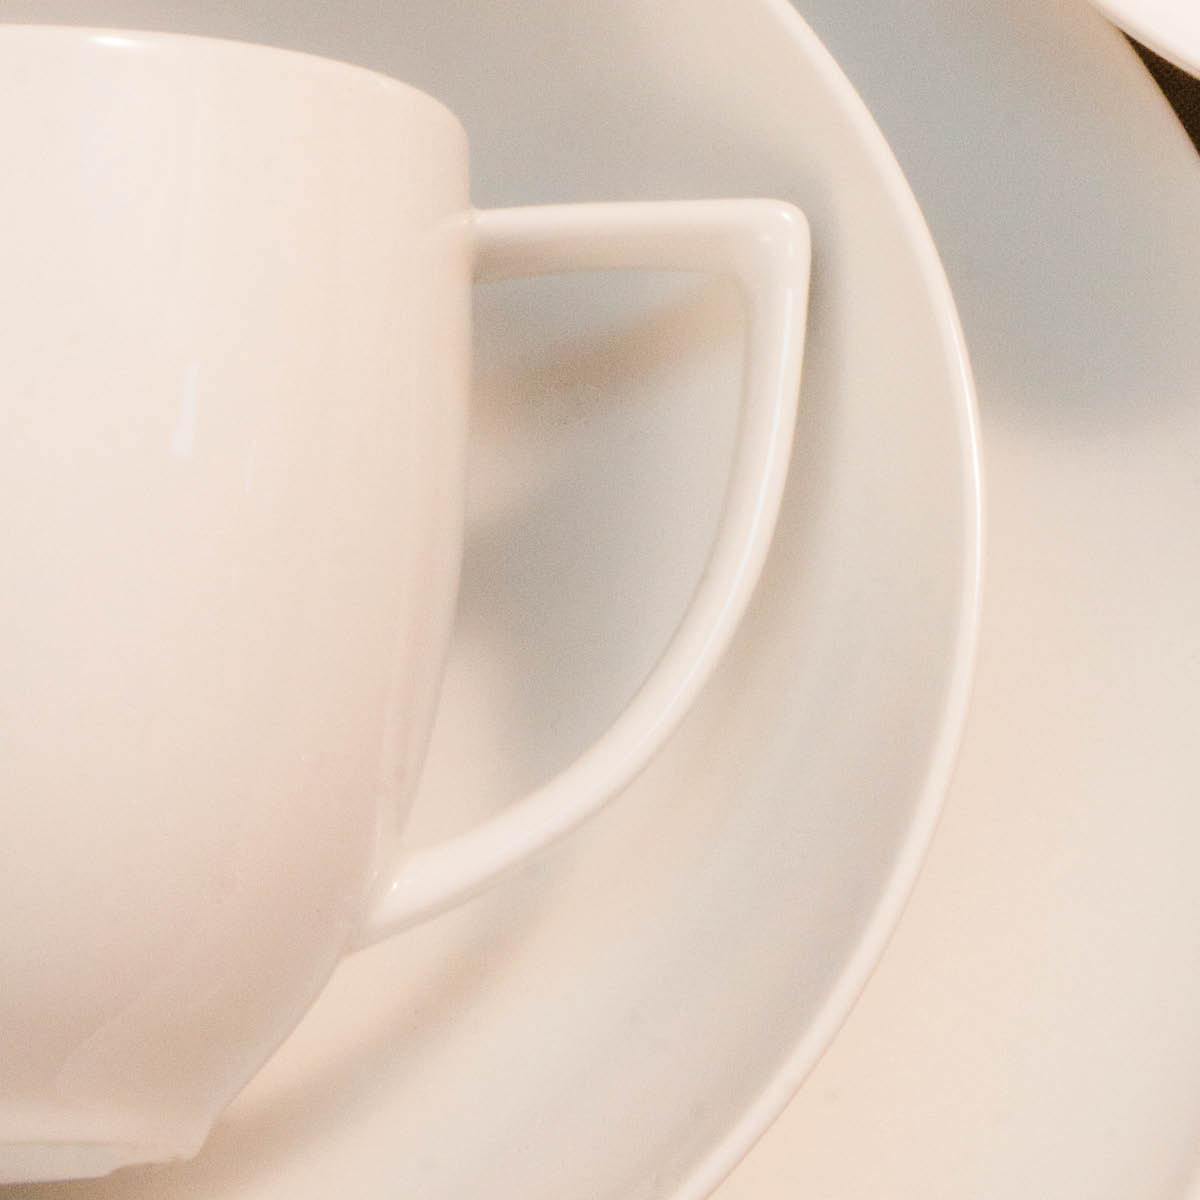 96487 Patra Porcelain Alto Cappuccino Cup (412010) Tomkin Australia Hospitality Supplies